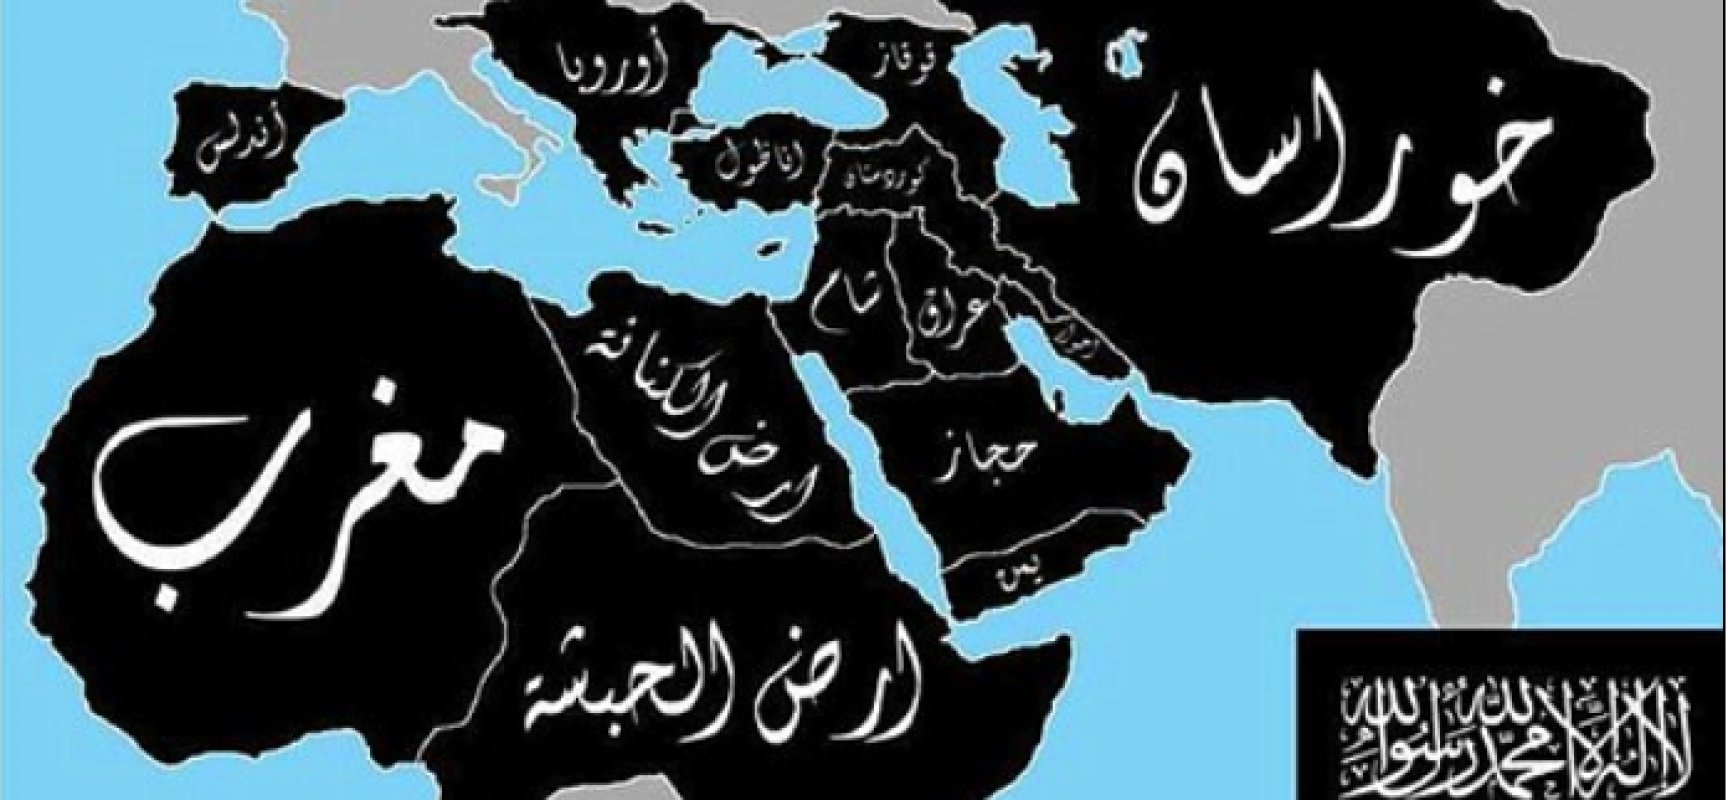 Estado Islamico - lugares a conquistar